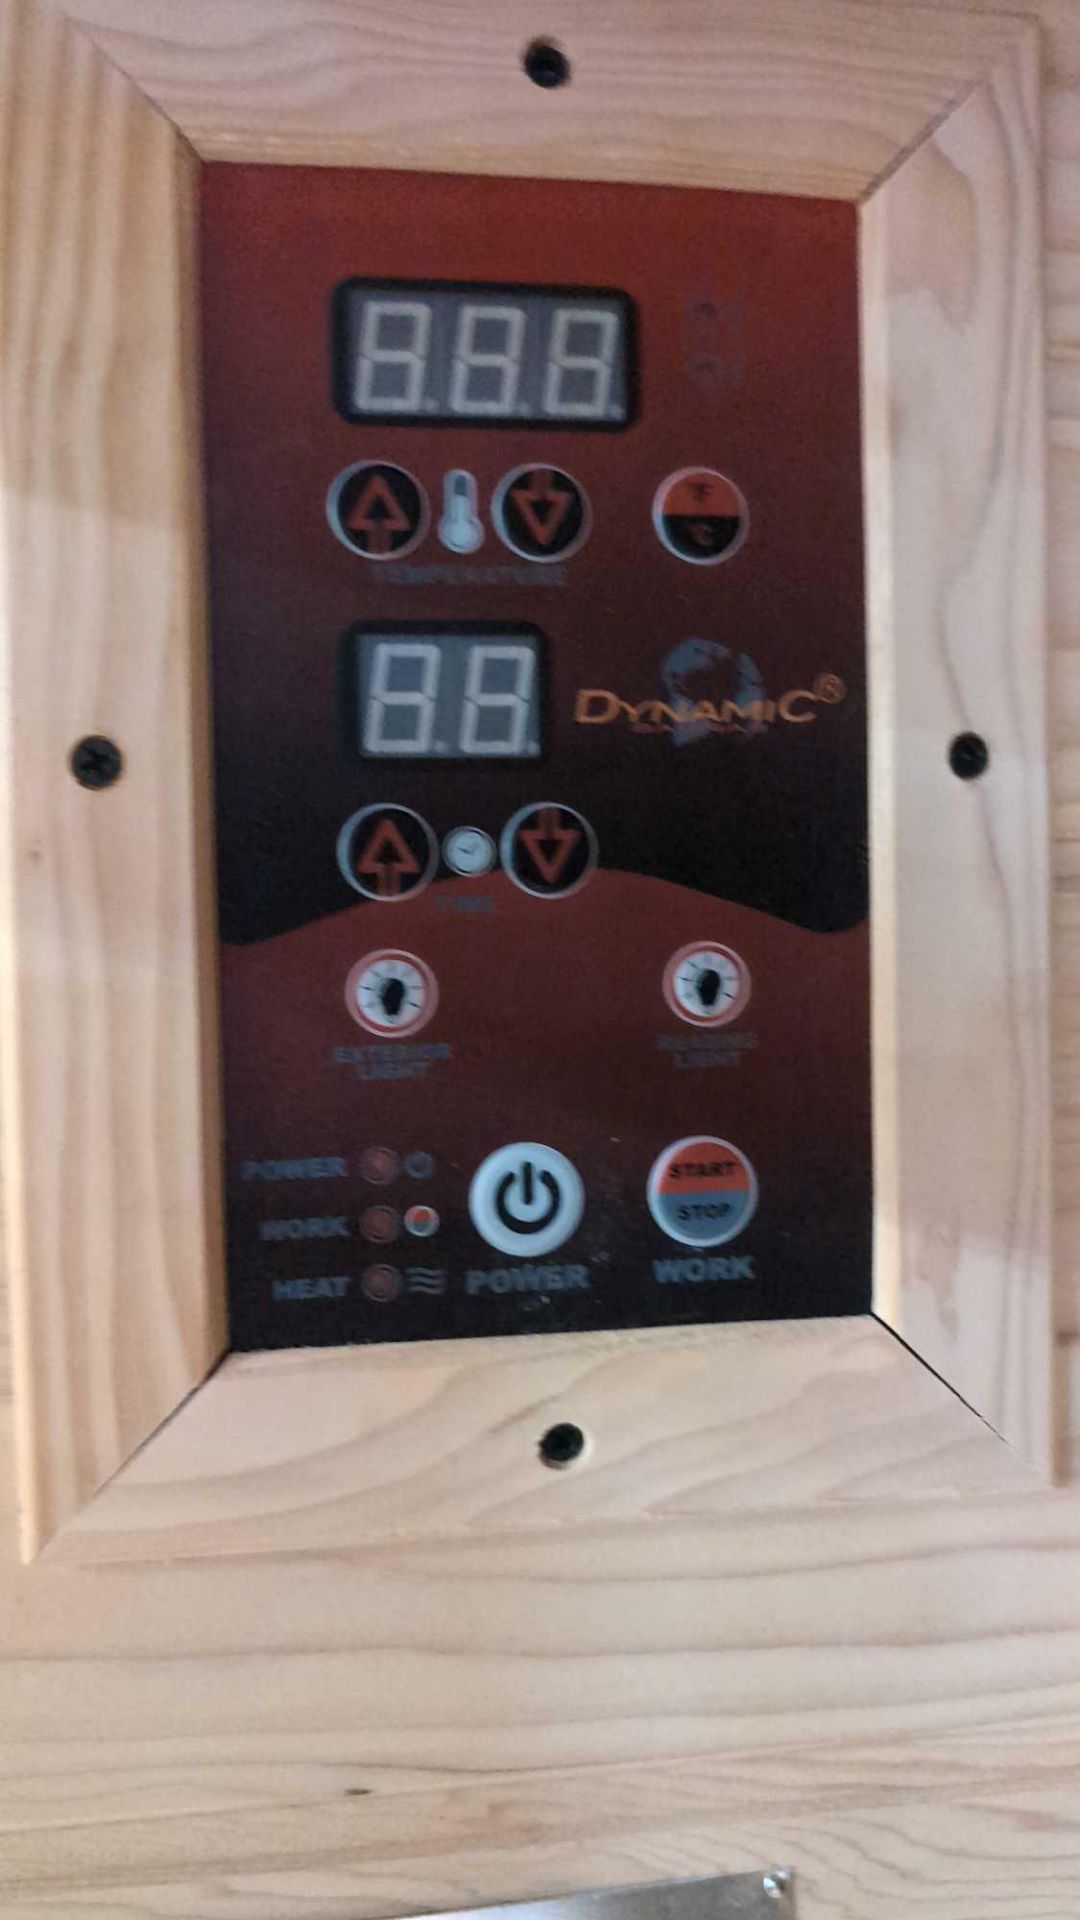 dynamic portable sauna - Image 3 of 6